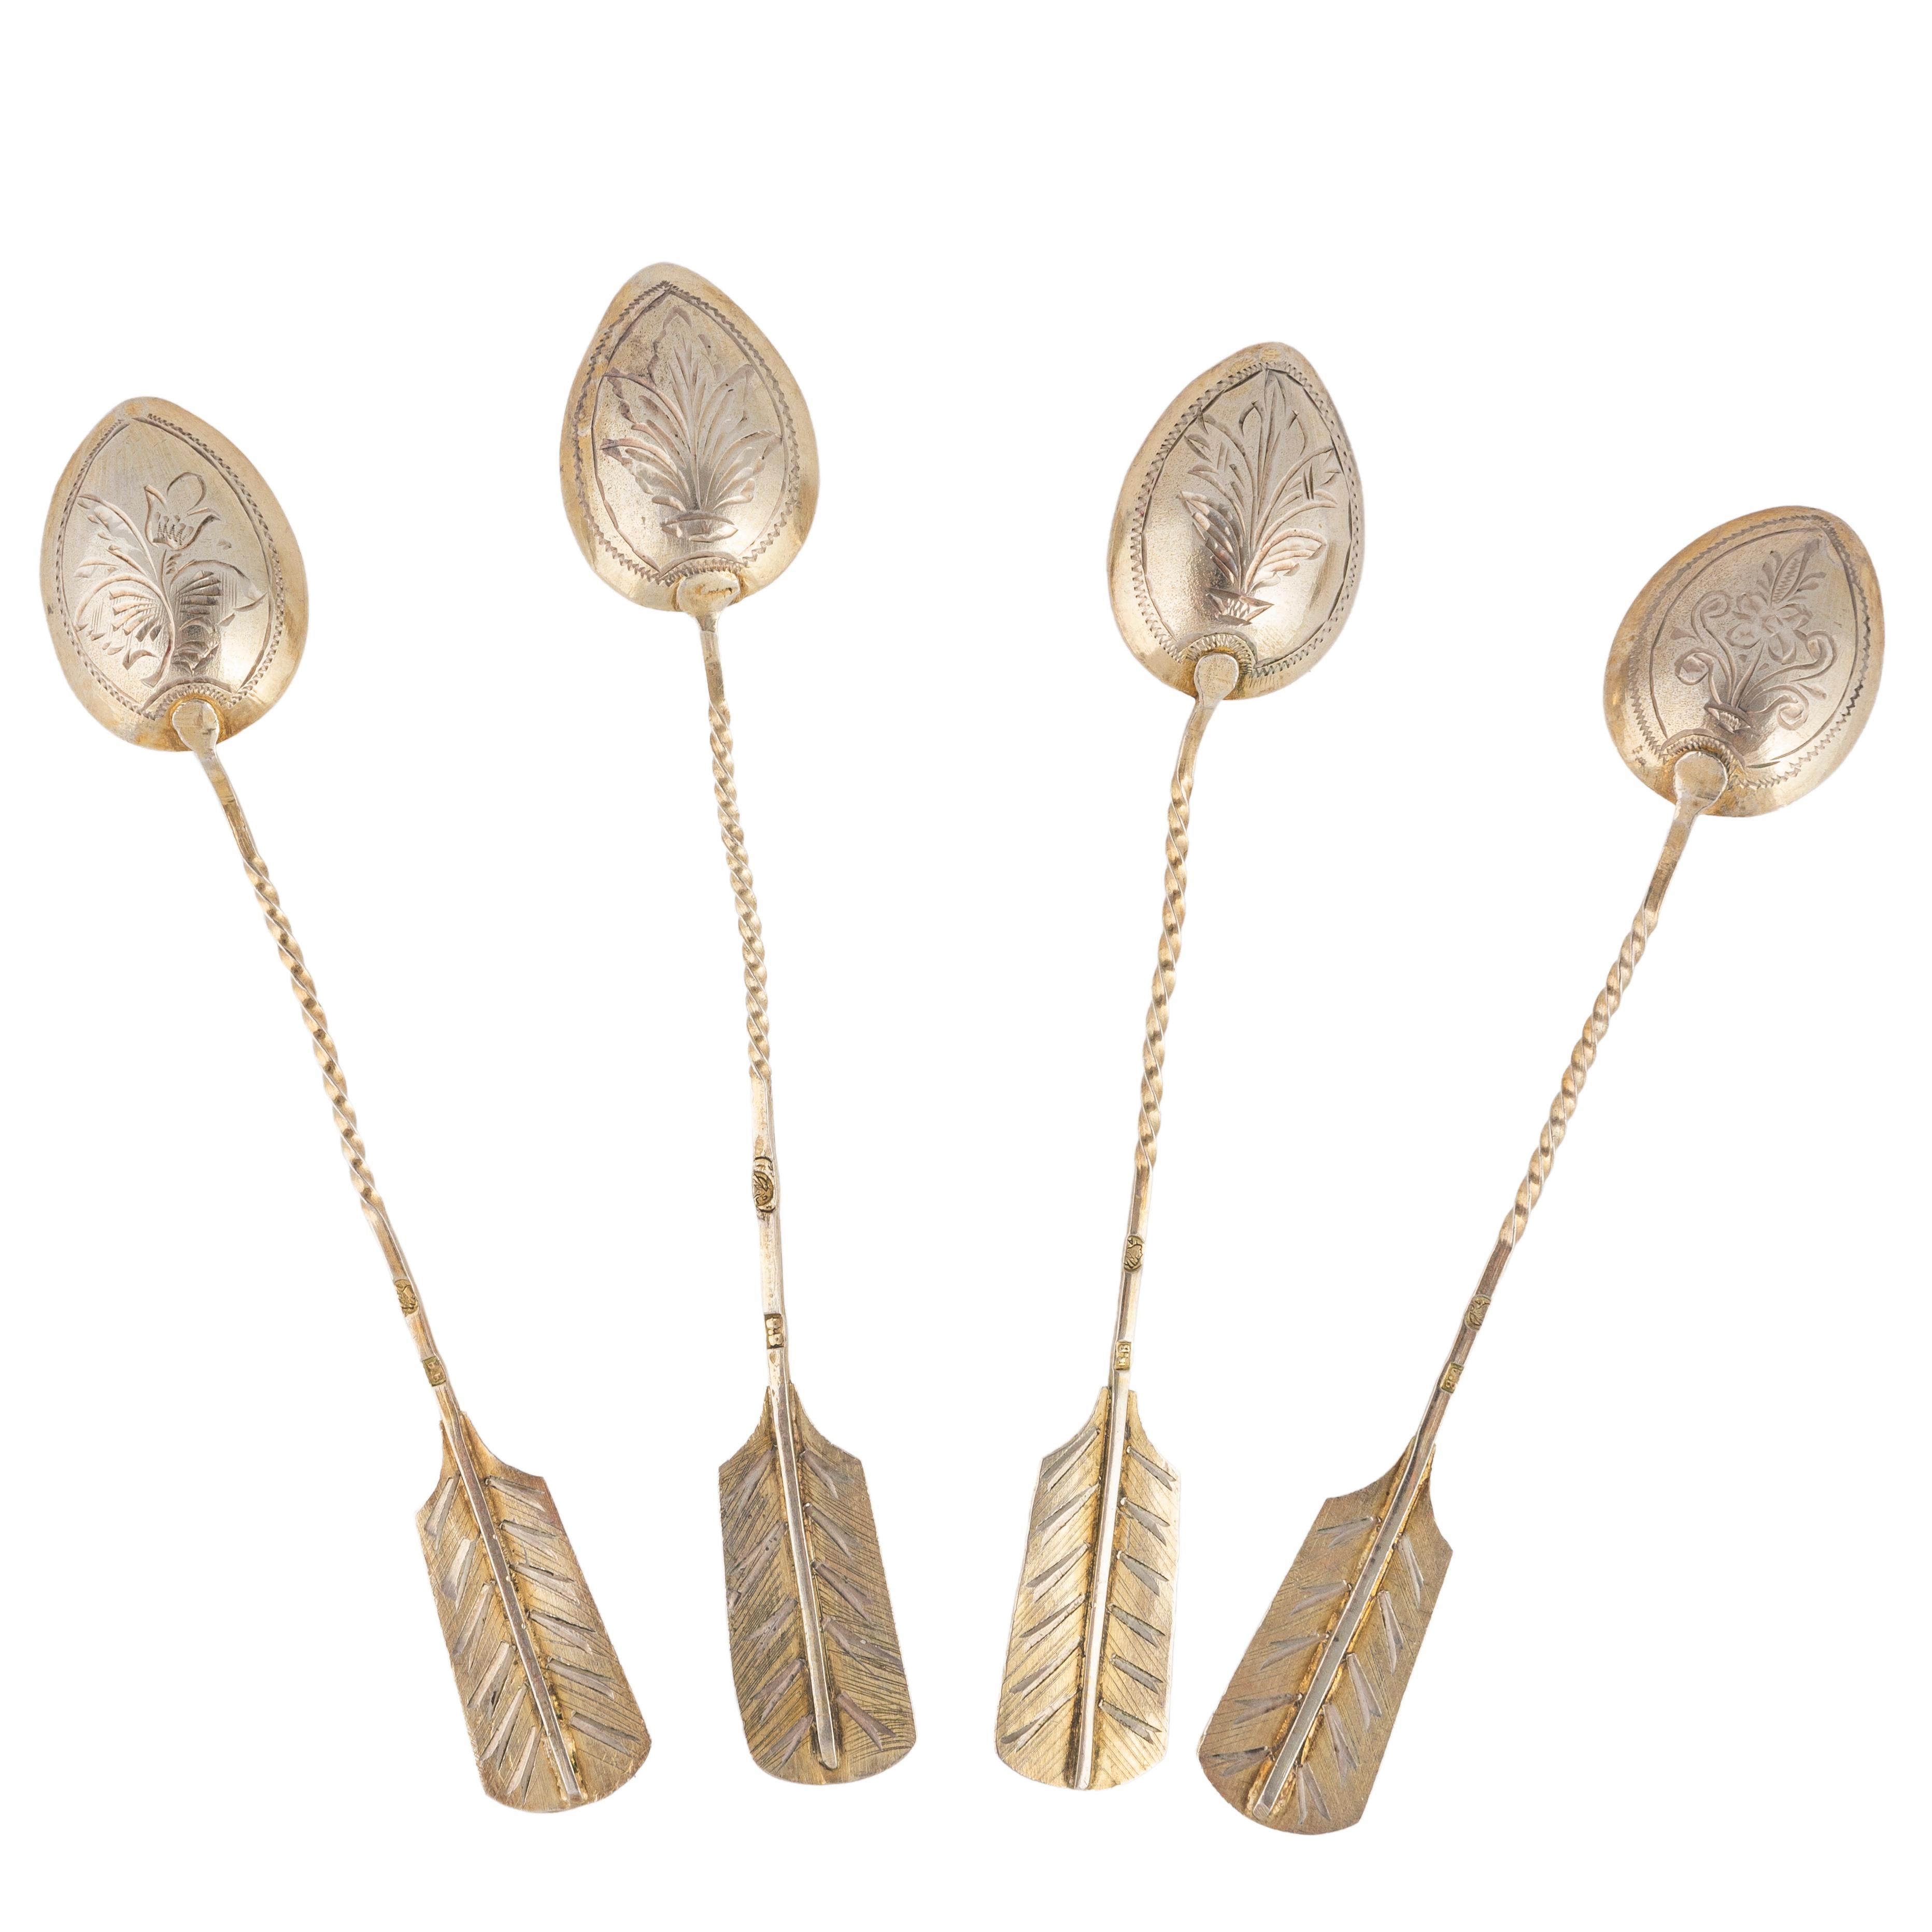 Russian Empire Four Russian Imperial-era Silver Arrow Demi-tasse Spoons, circa 1900